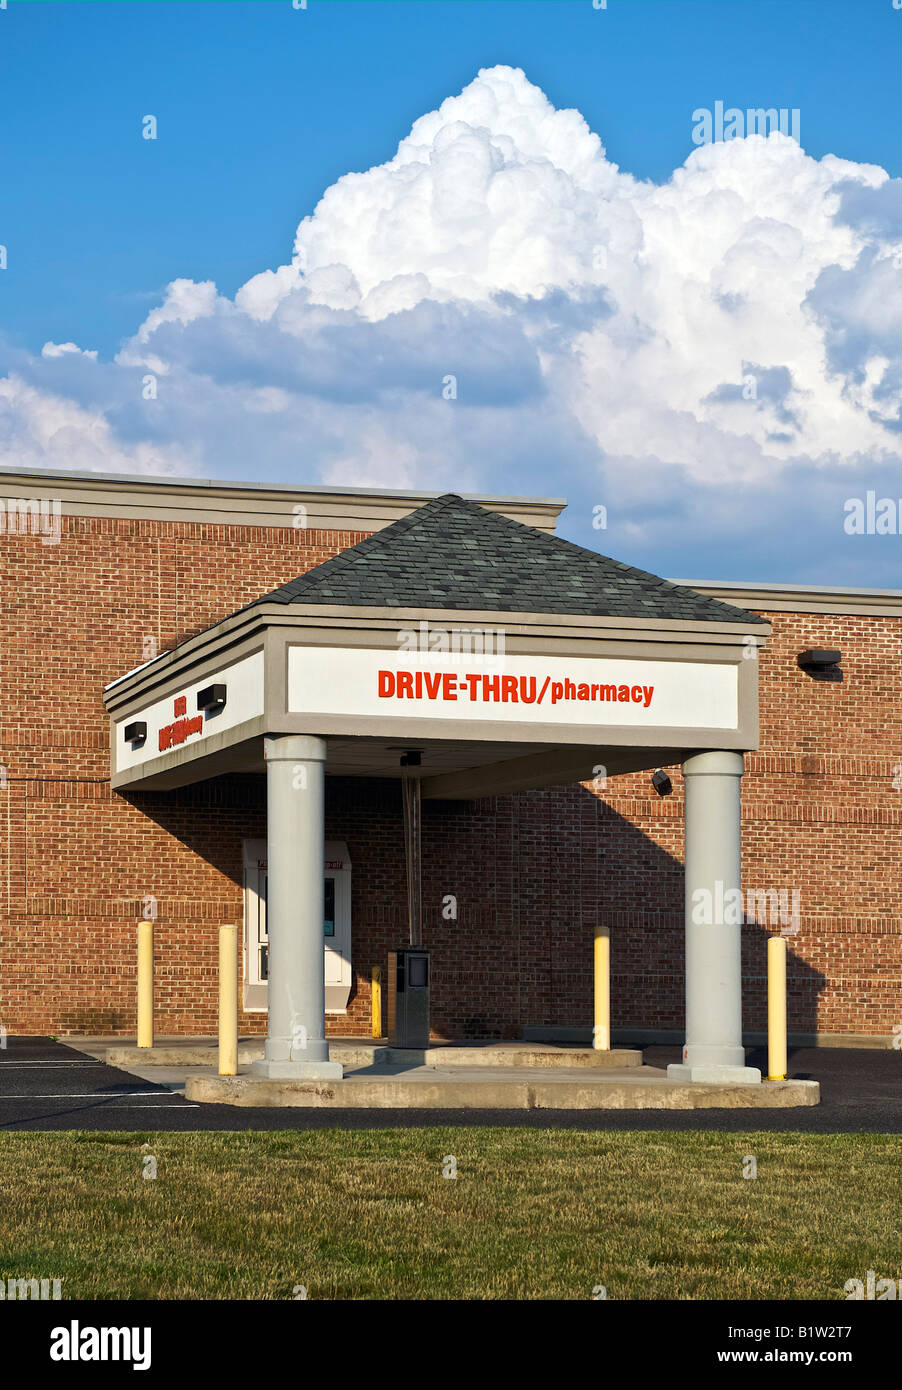 Drive through pharmacy Stock Photo